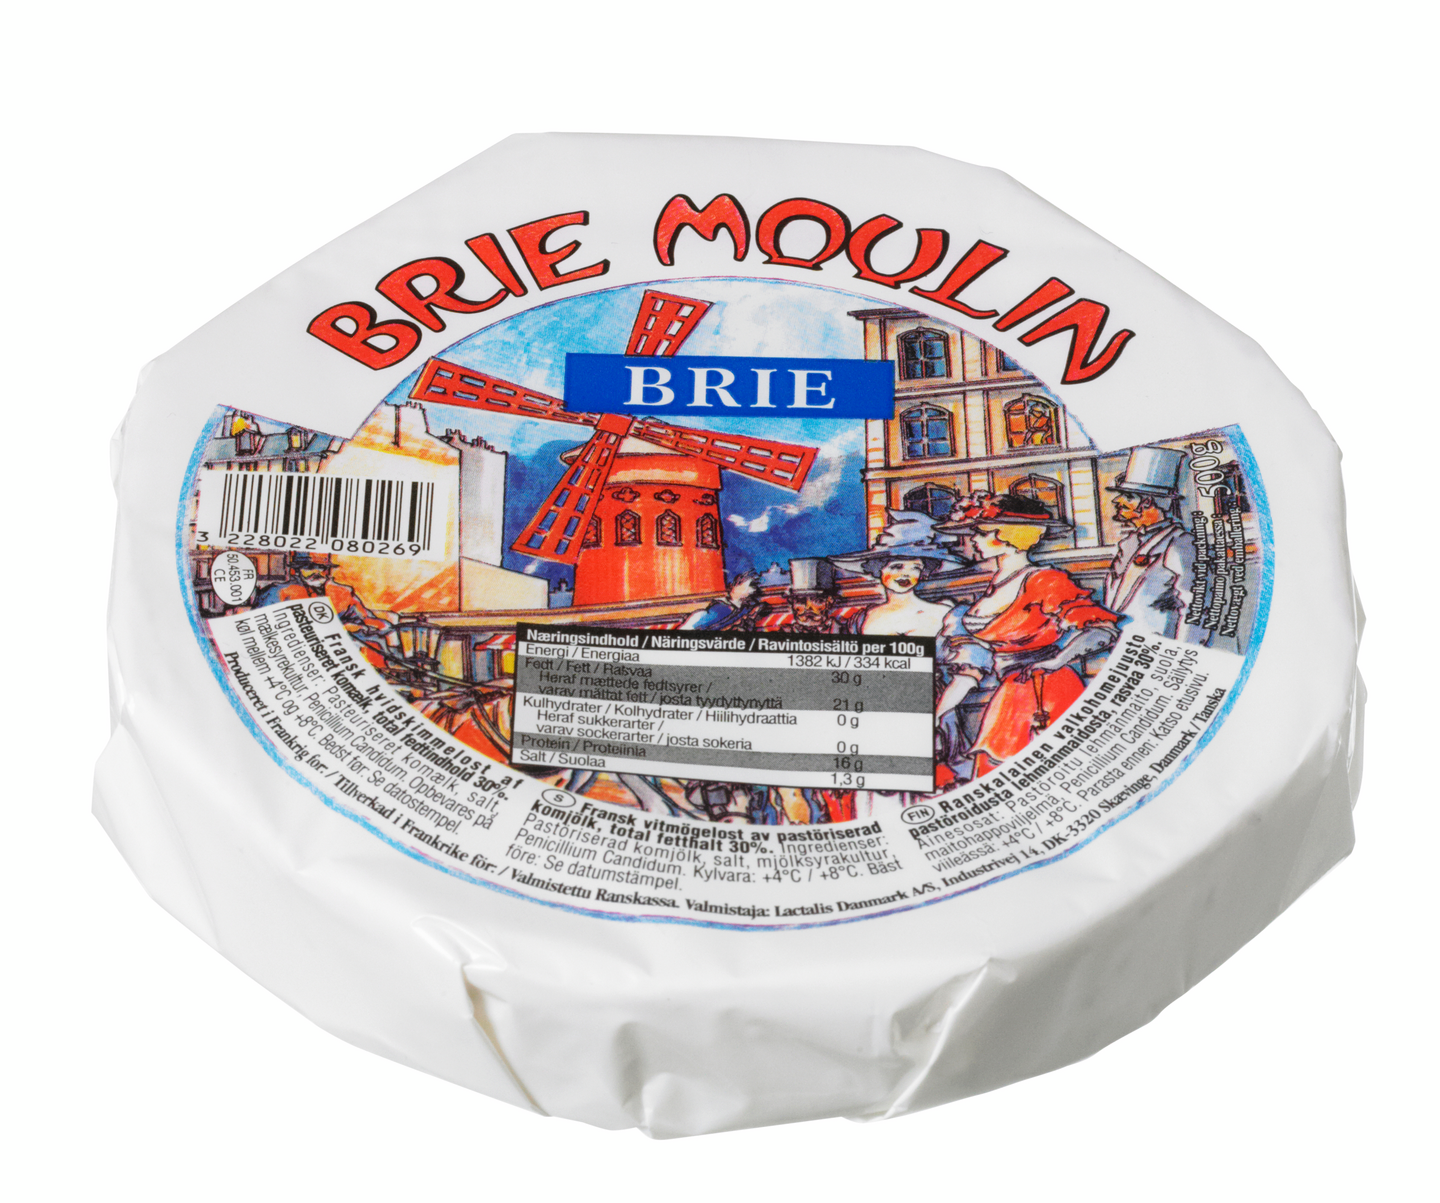 Brie Moulin 500g